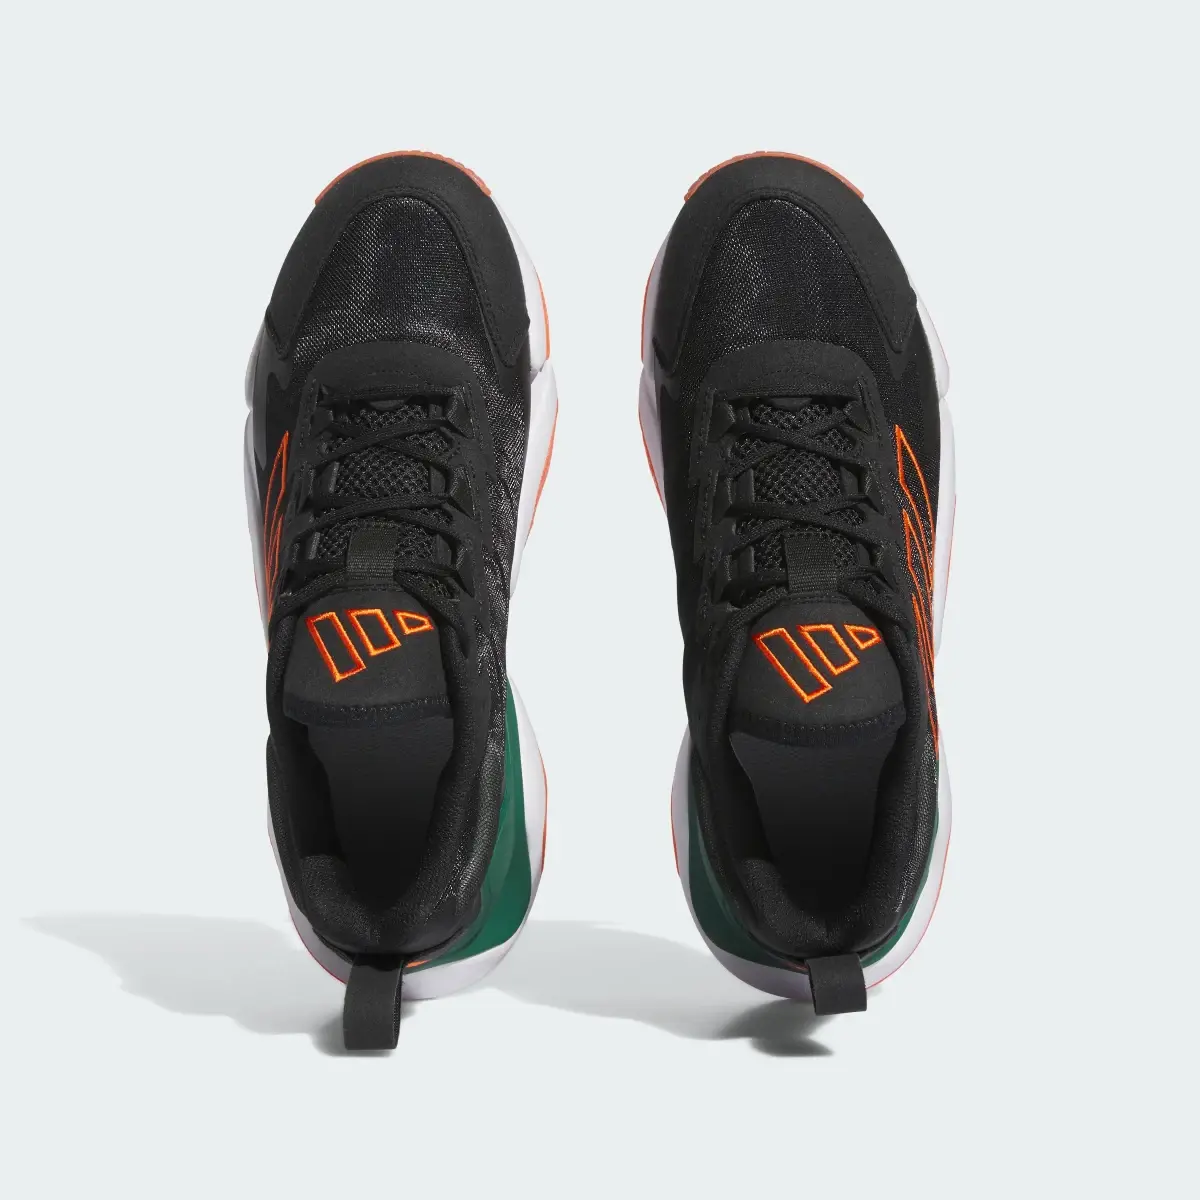 Adidas Impact FLX II Turf Training Shoes. 3